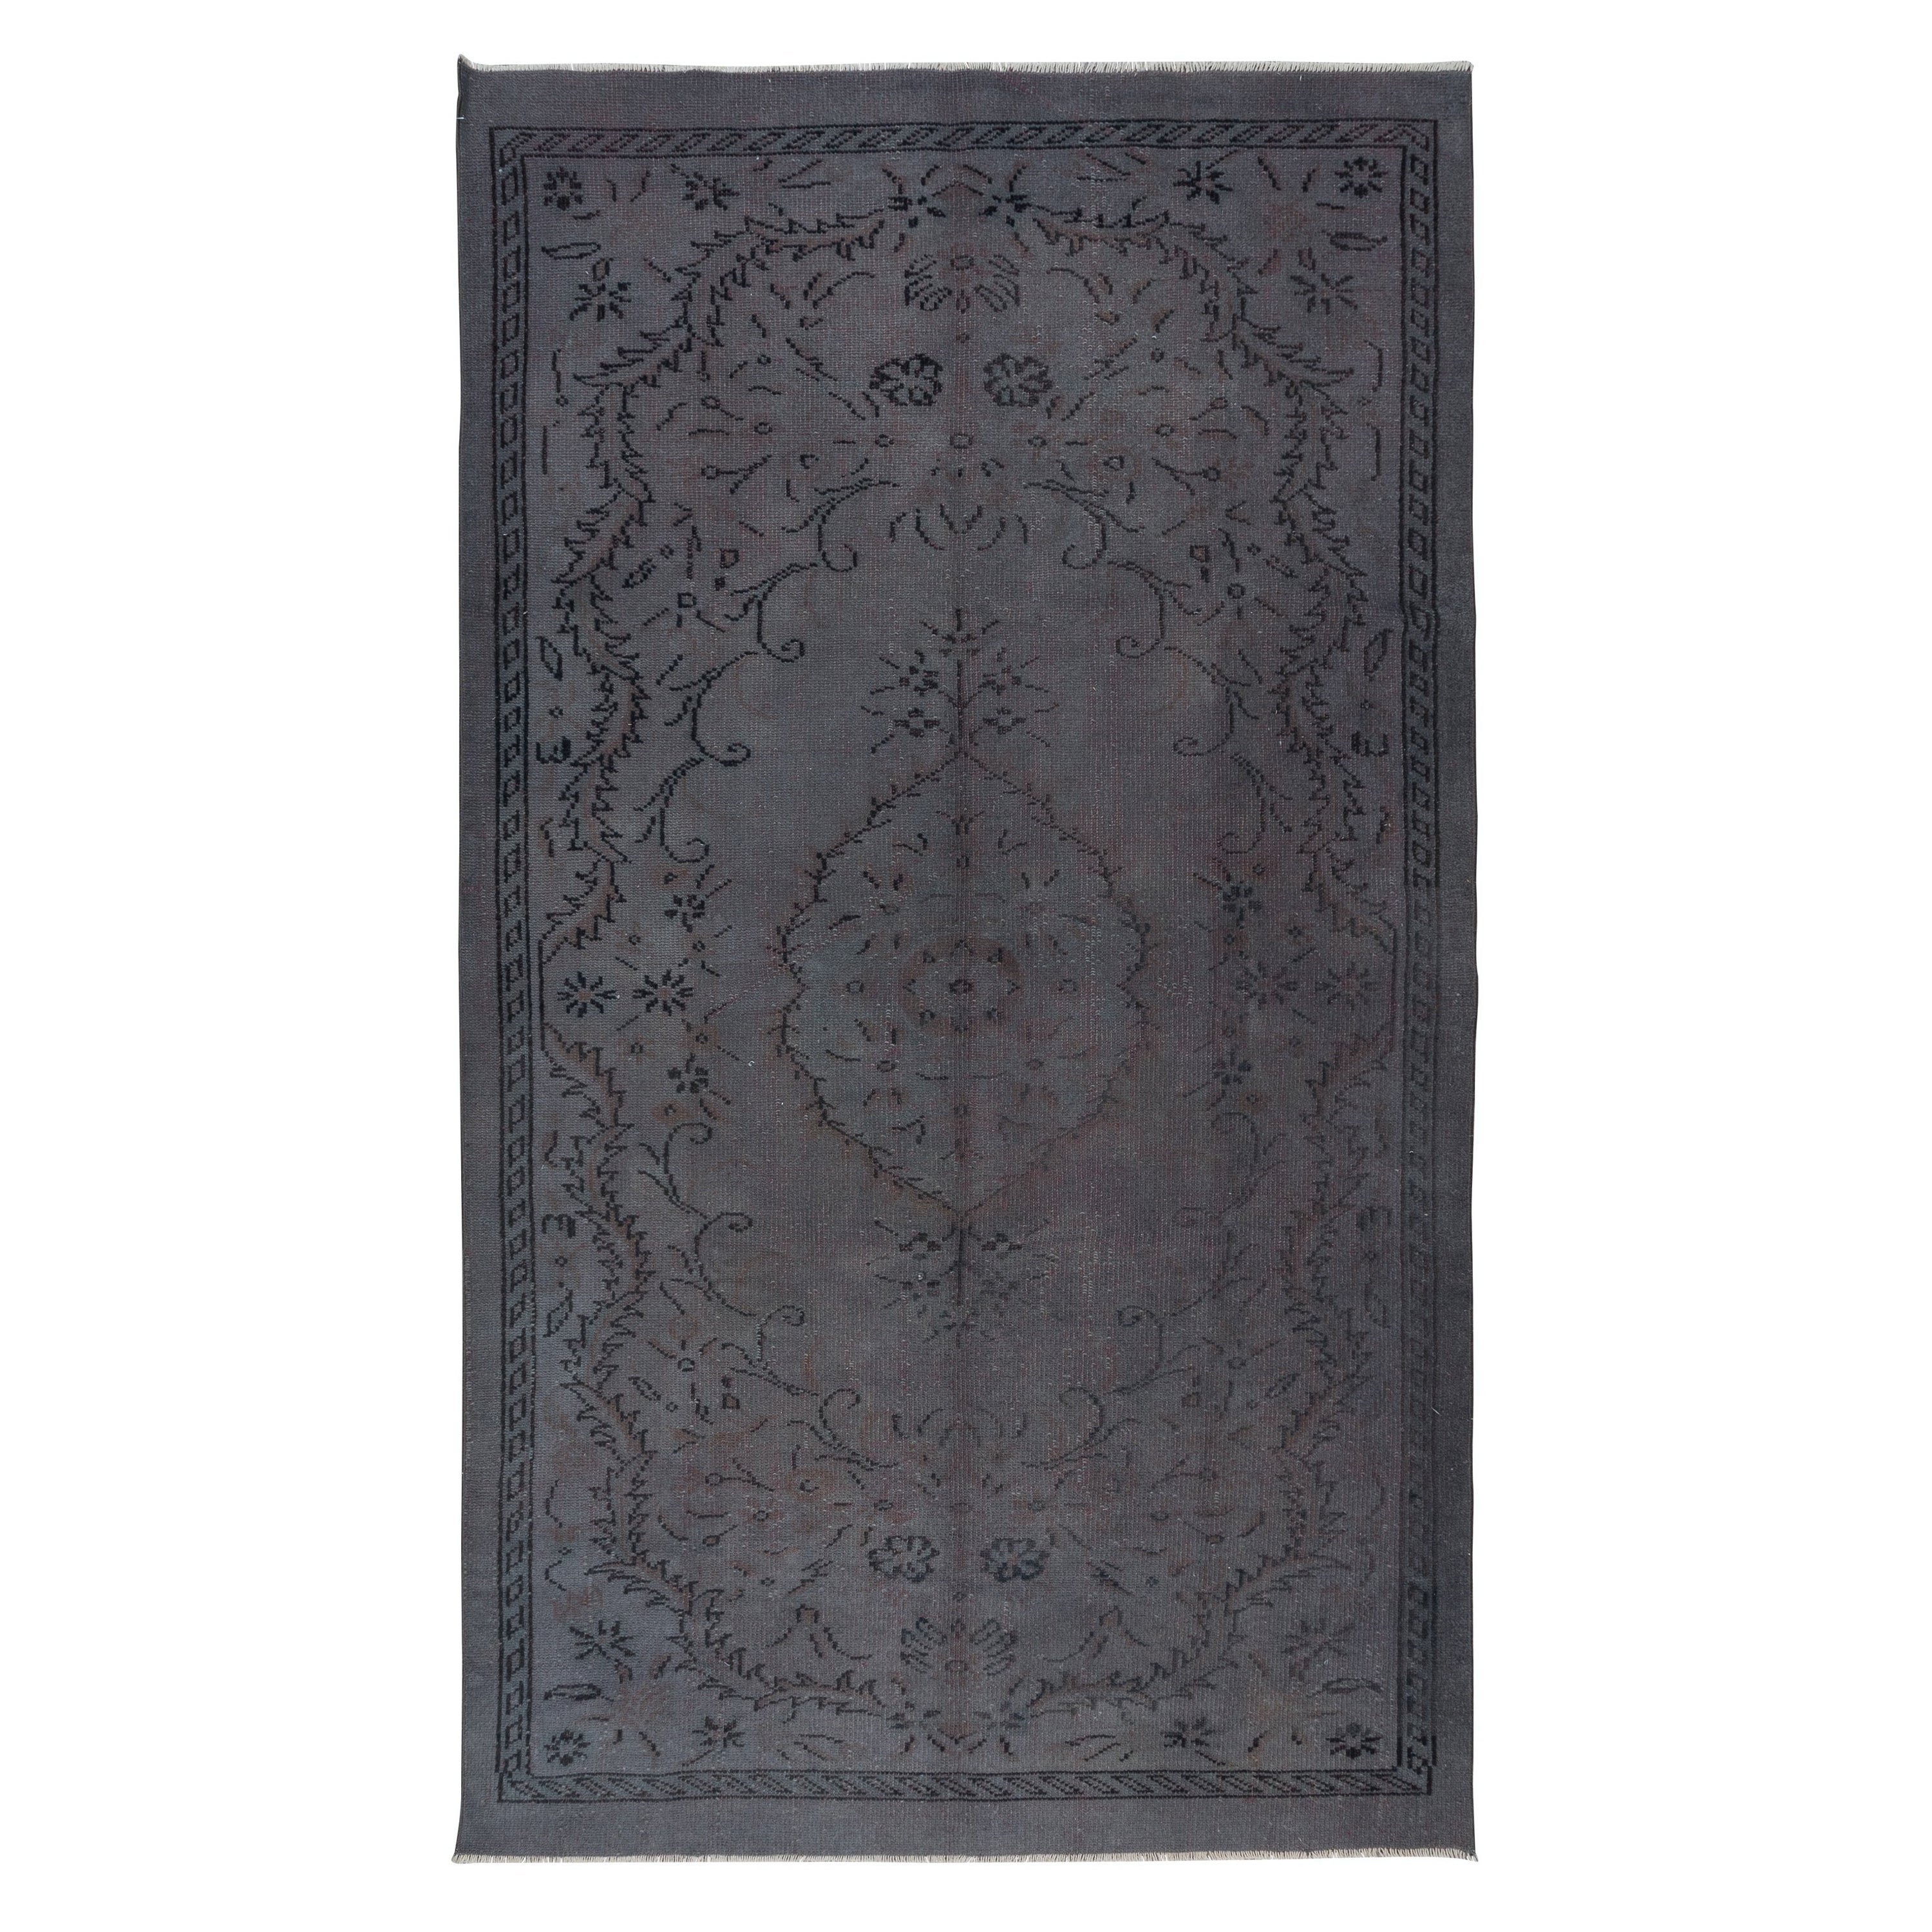 5.7x9.3 Ft Iron Gray Handmade Area Rug from Turkey, Room Size Modern Carpet